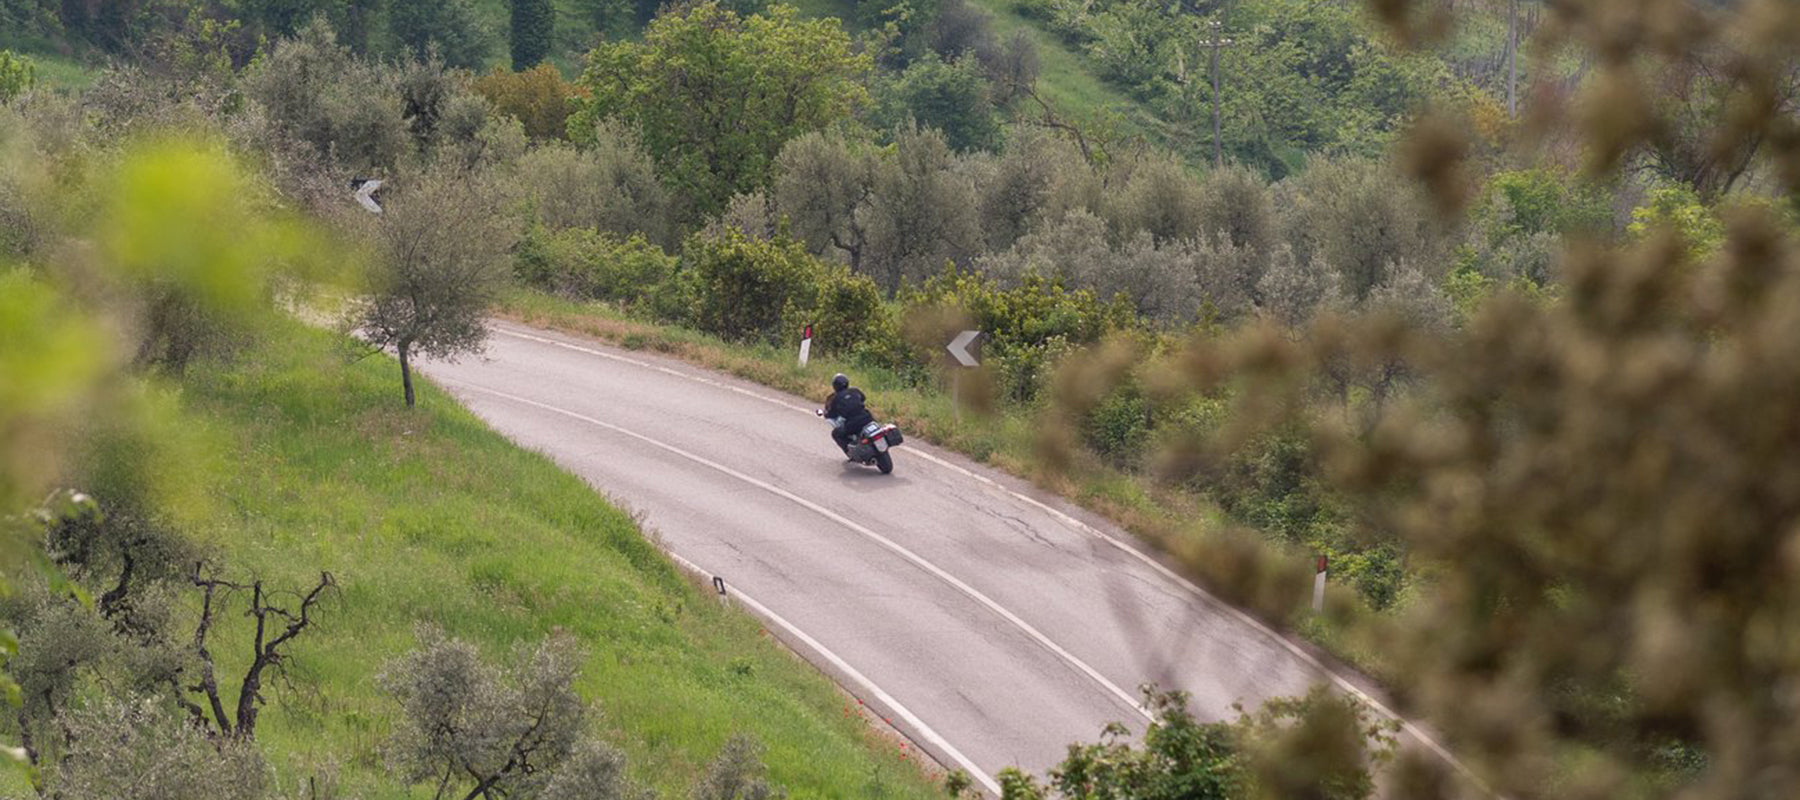 Motorcycle rider taking a turn